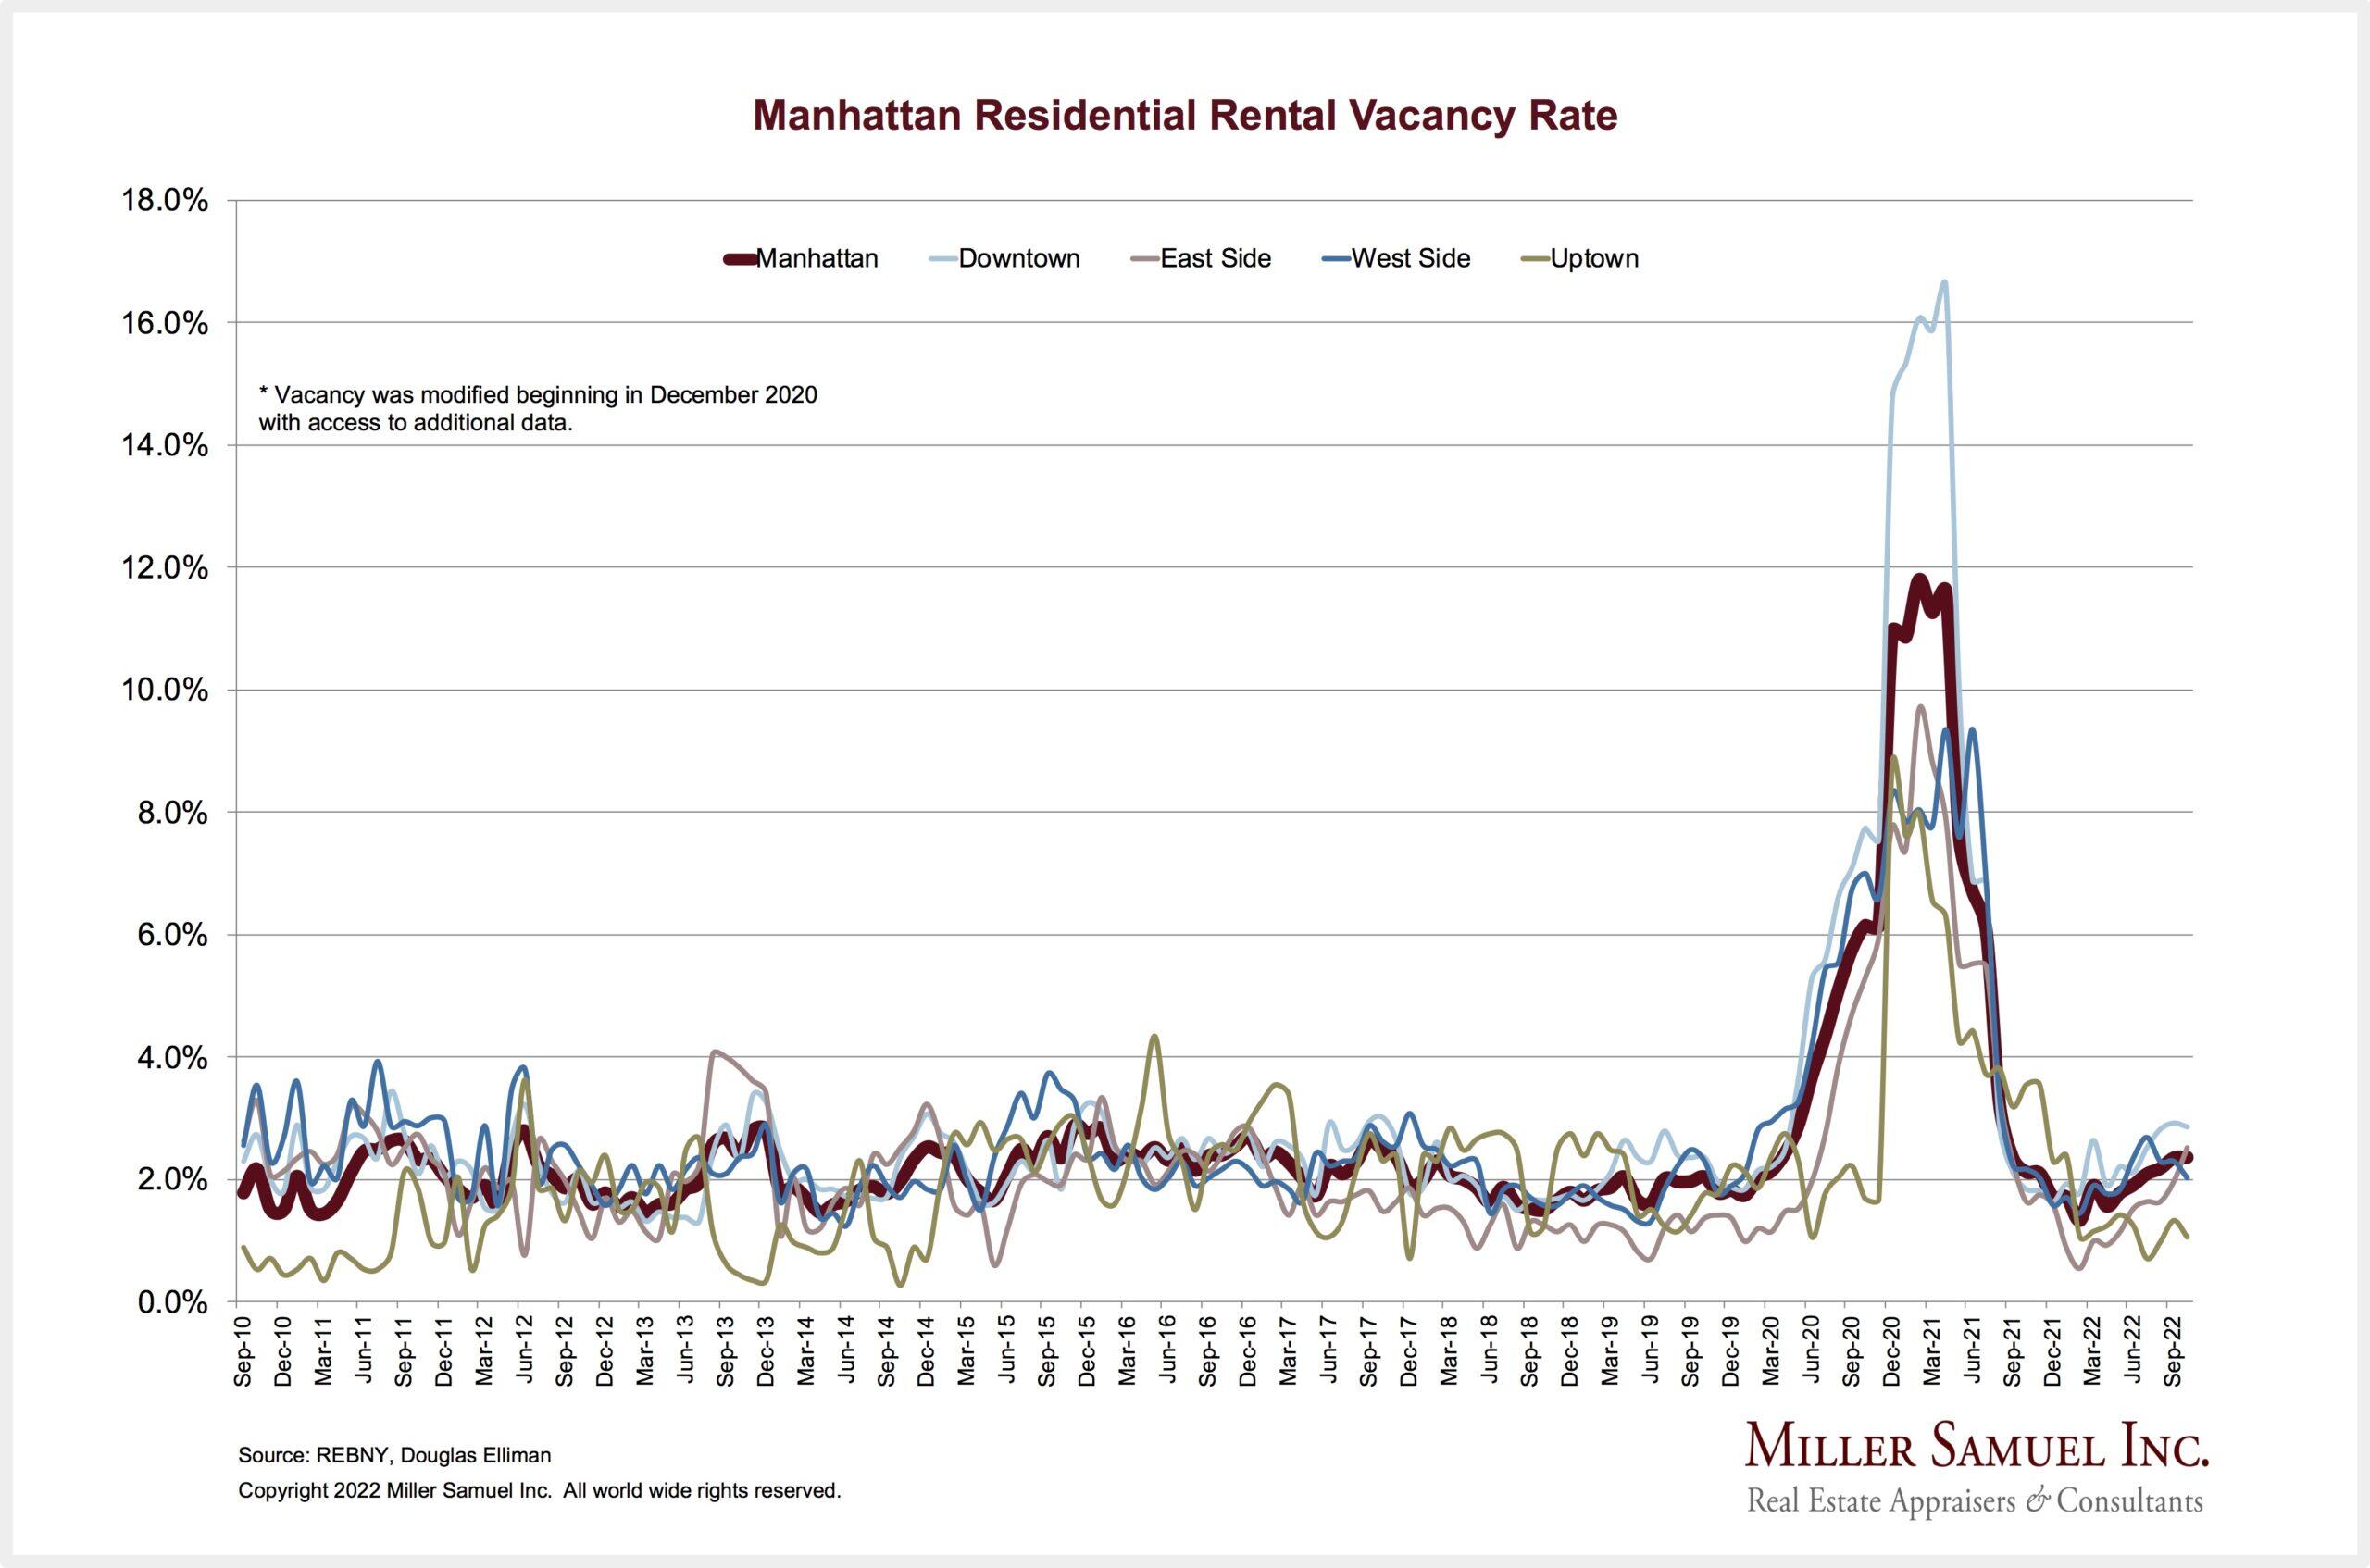 Manhattan Residential Rental Vacancy Rate (neighborhood) [Source: Miller Samuel, Inc. — REBNY, Douglas Elliman]